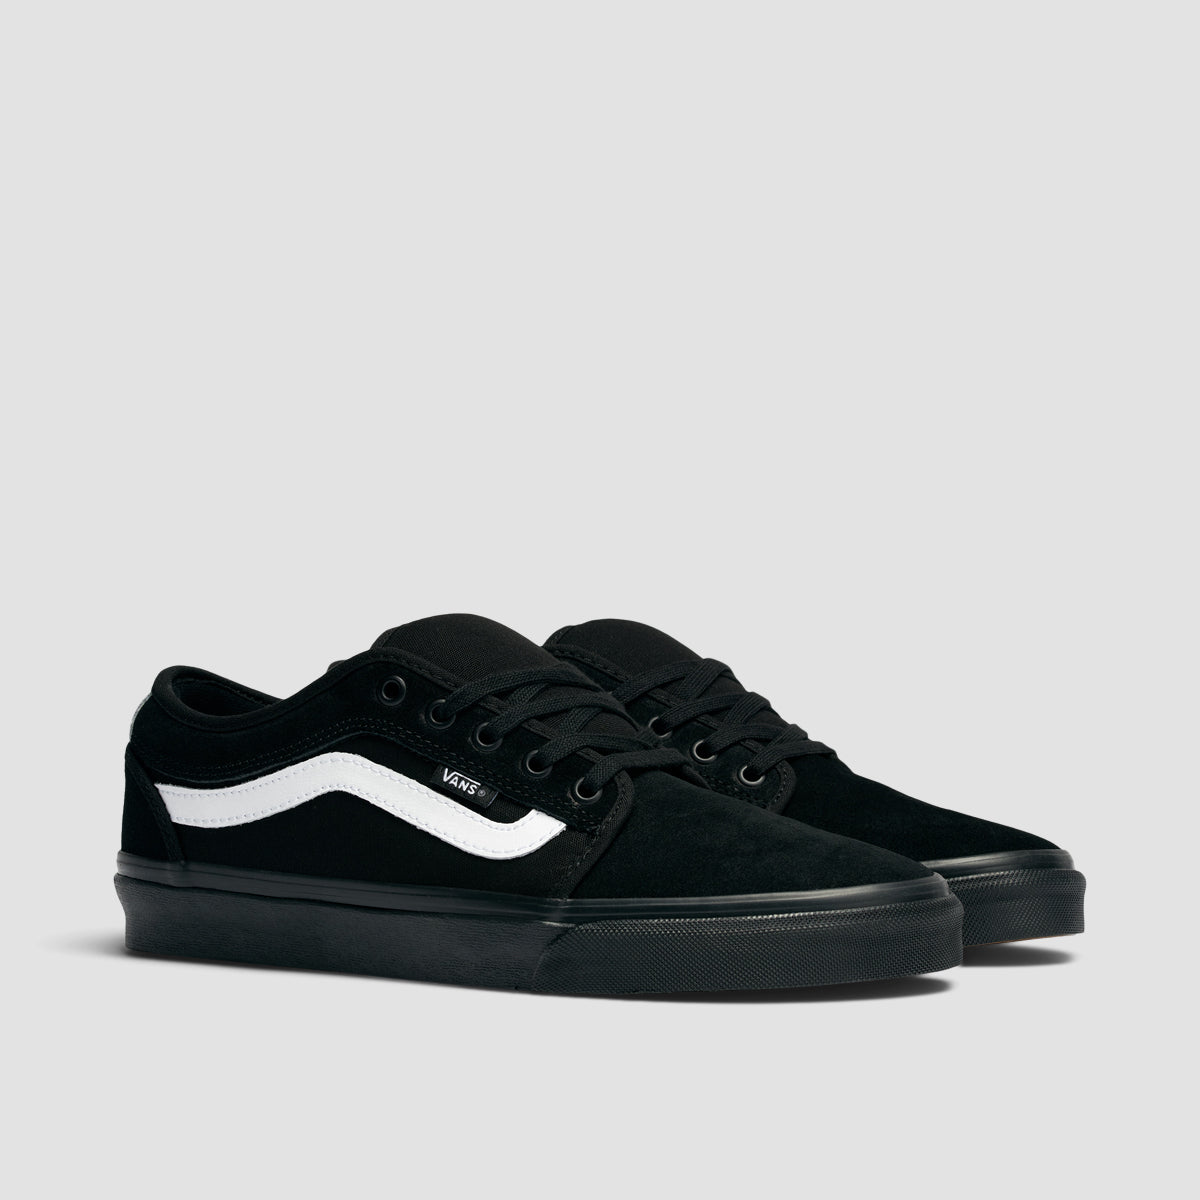 Vans Chukka Sidestripe Shoes - Black/Black/White